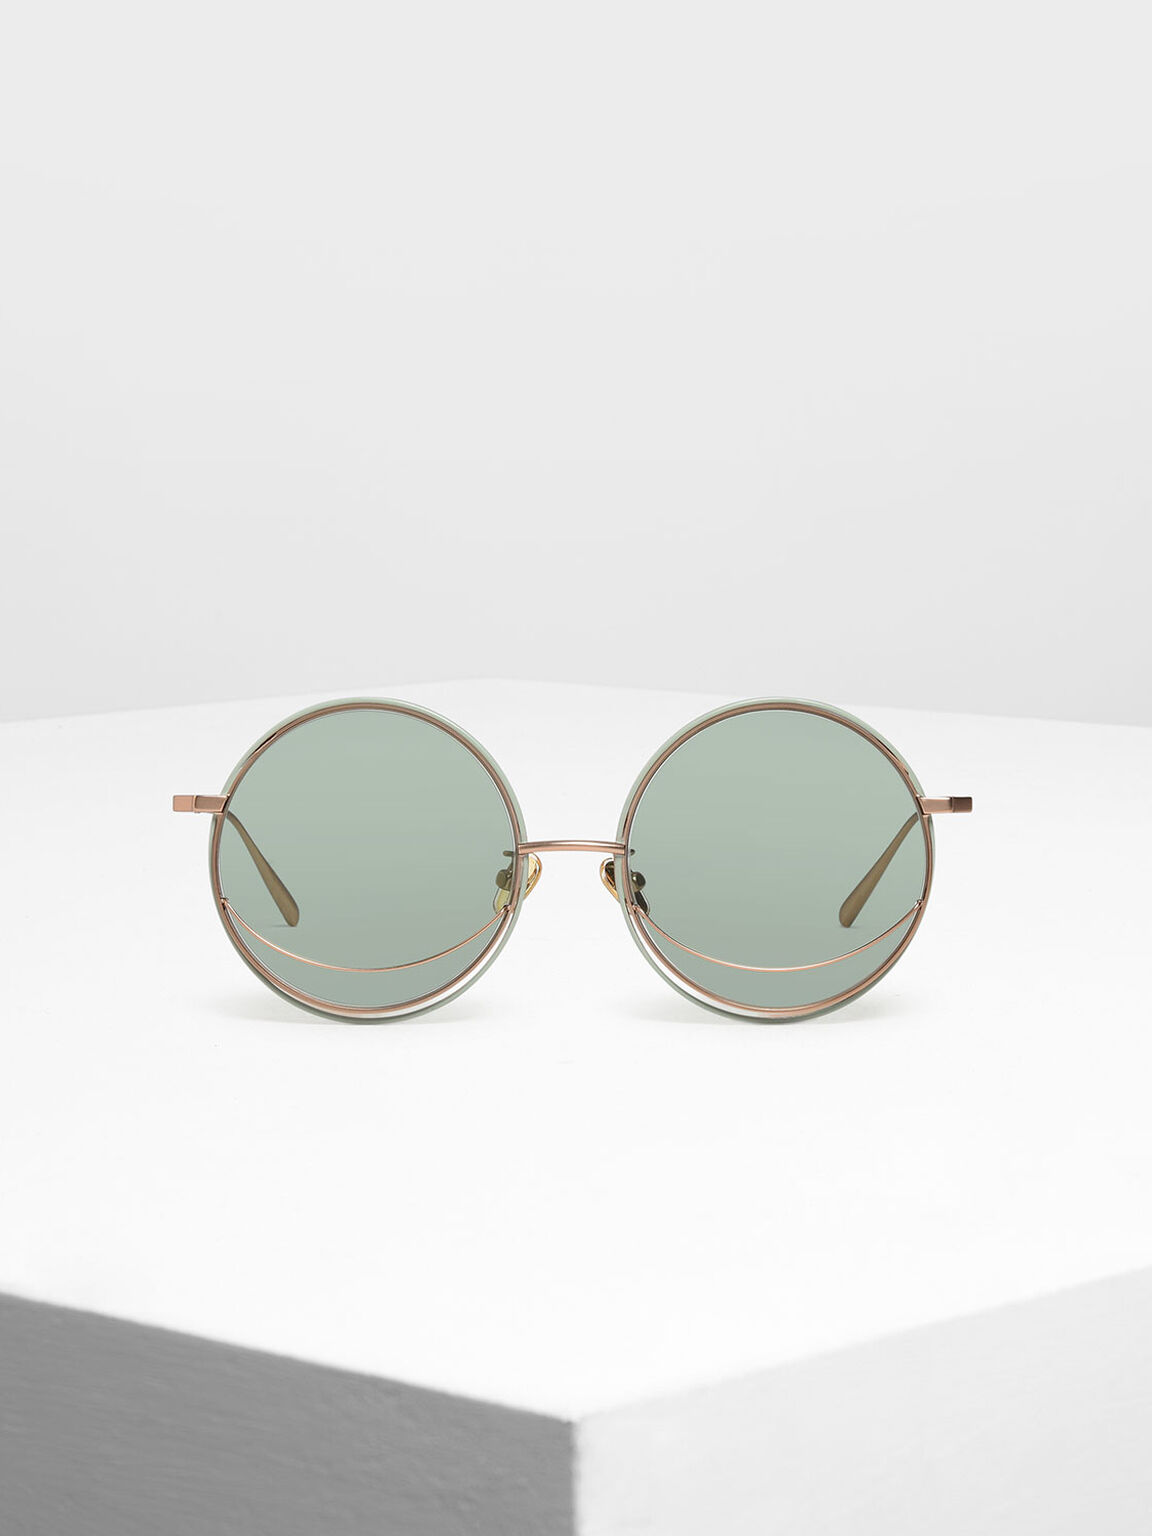 Circle Frame Sunglasses, Green, hi-res